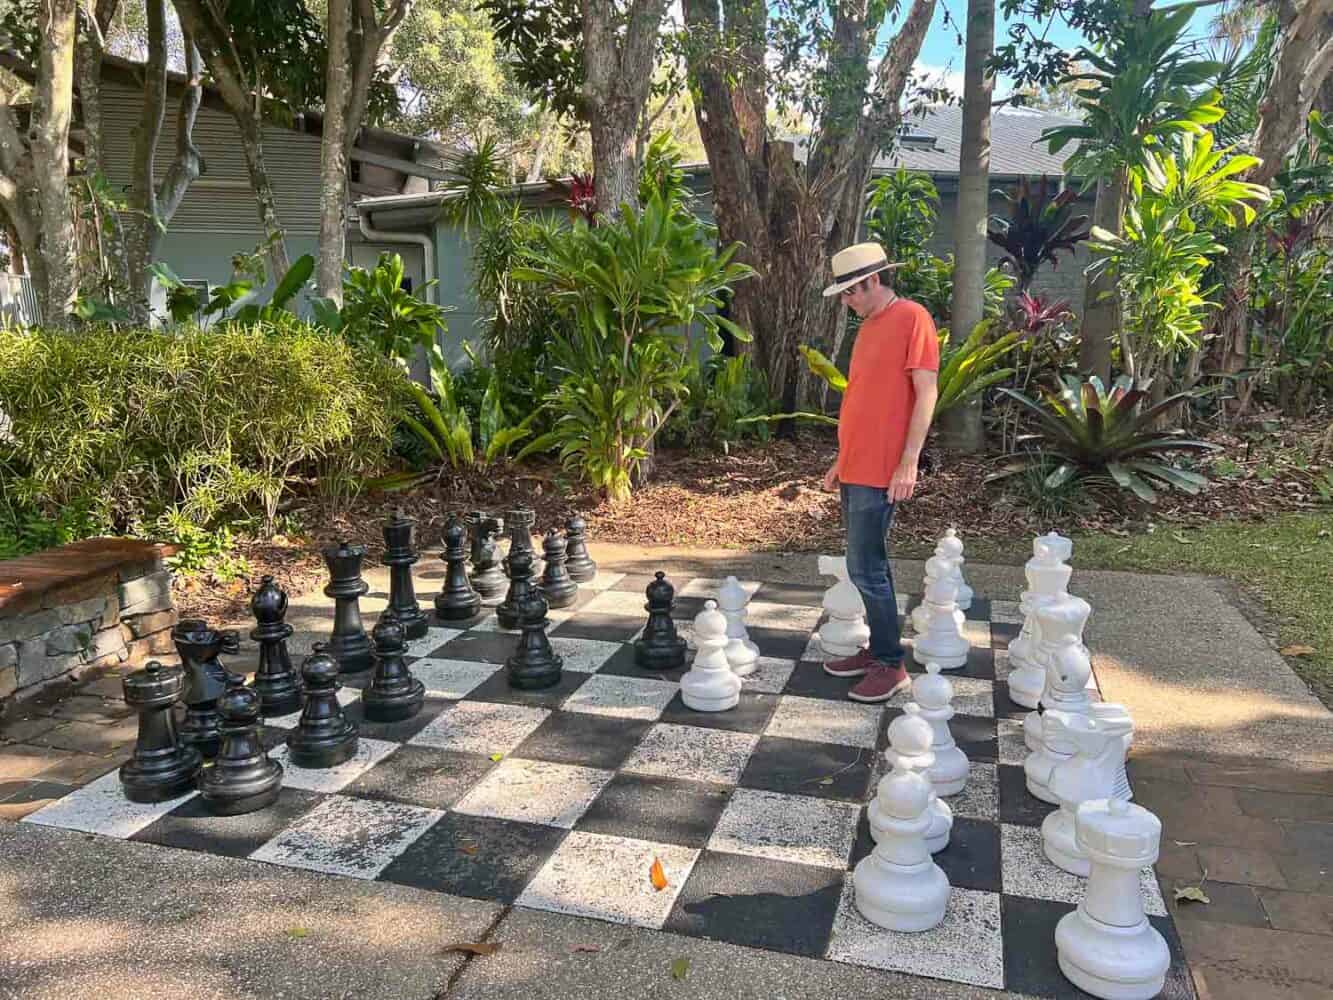 Simon playing giant chess in Felicity Park, Caloundra, Queensland, Australia